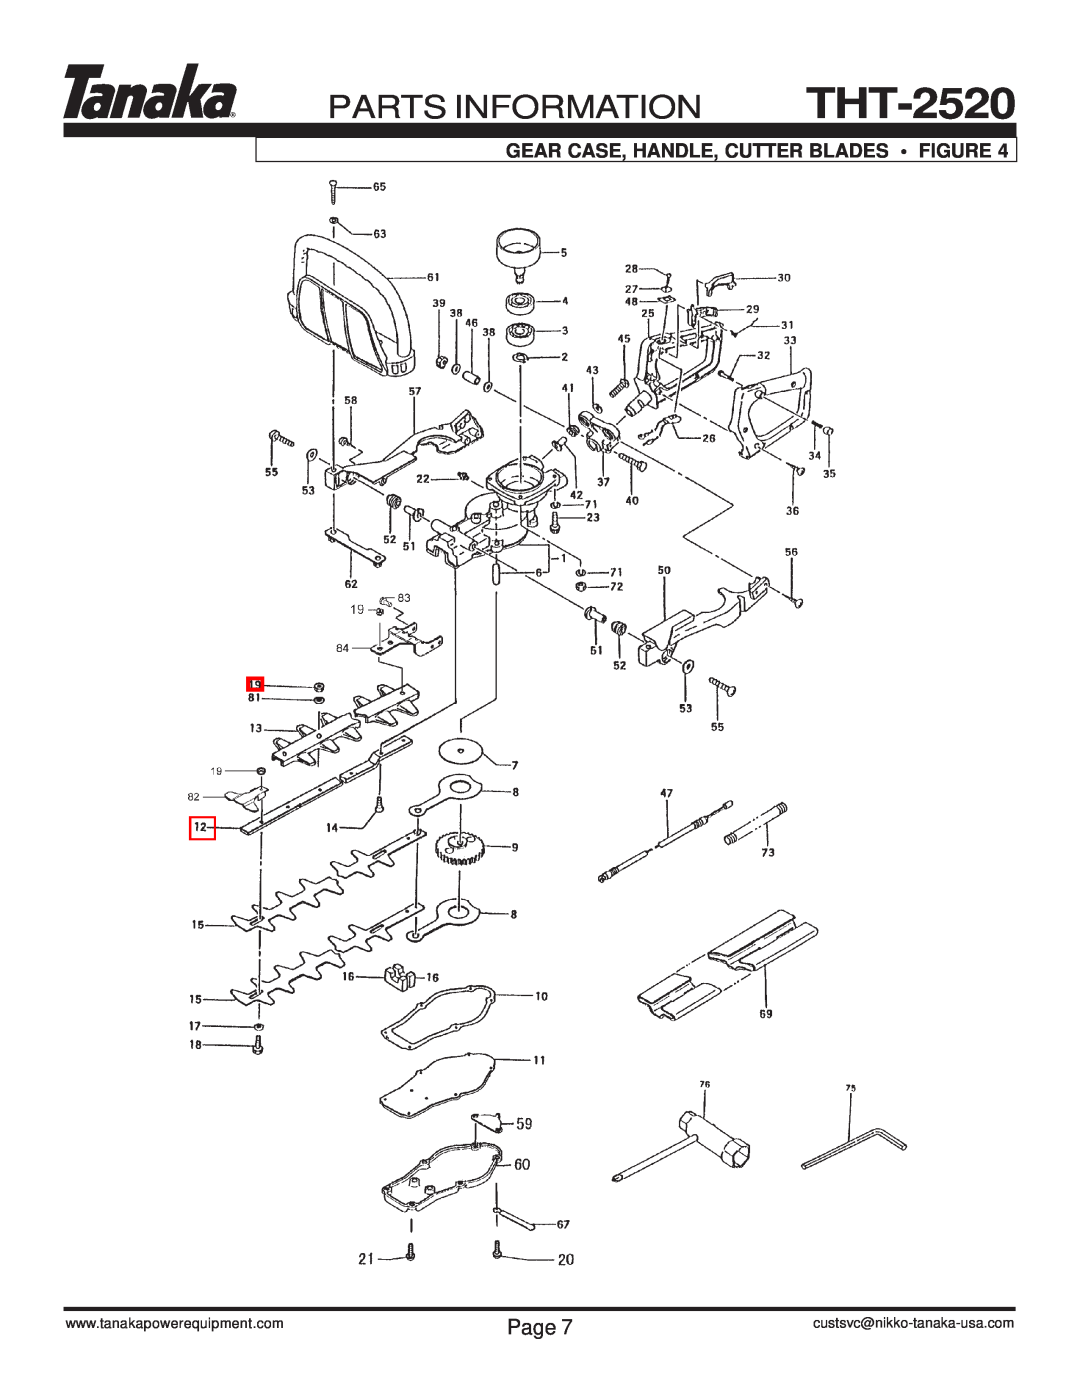 Tanaka THT-2520 manual Parts Information, Gear Case, Handle, Cutter Blades Figure, Page, custsvc@nikko-tanaka-usa.com 